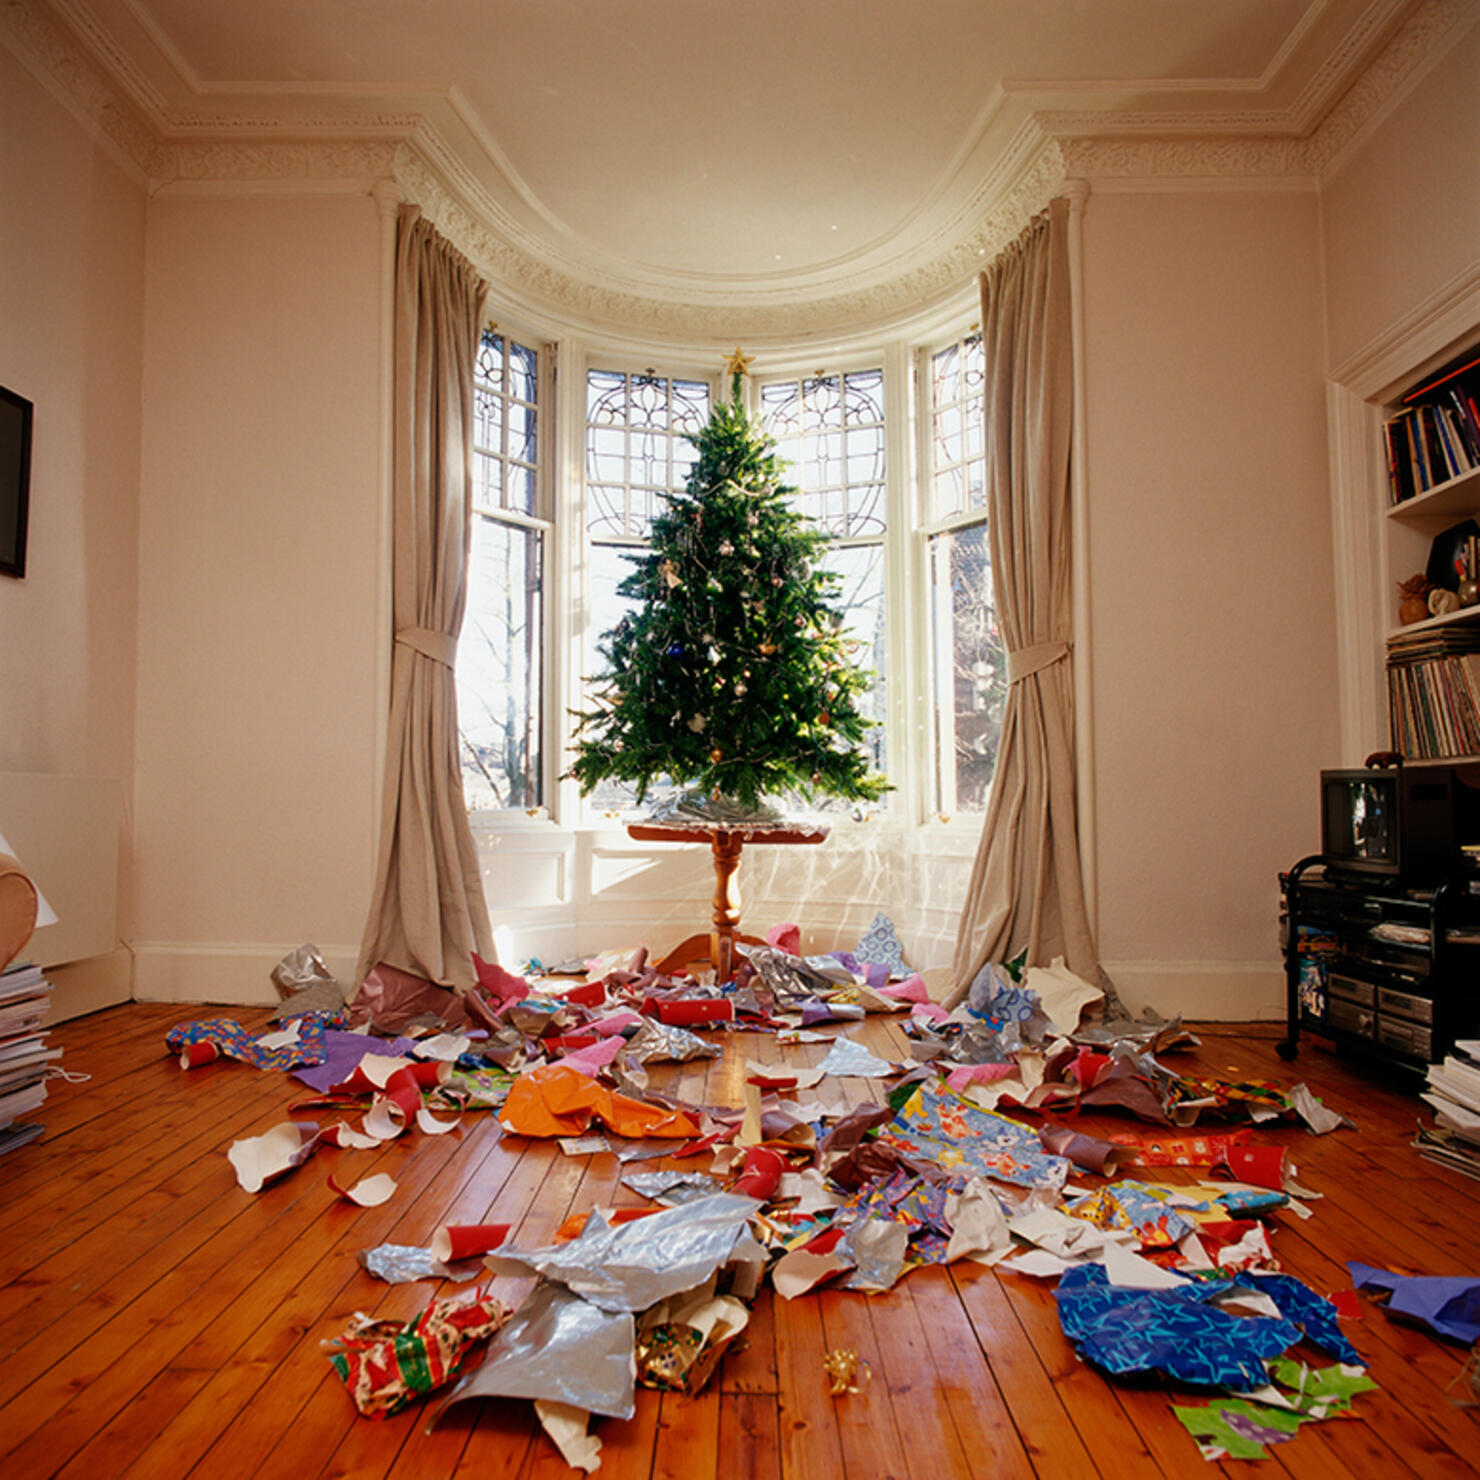 Messy living room at Christmas